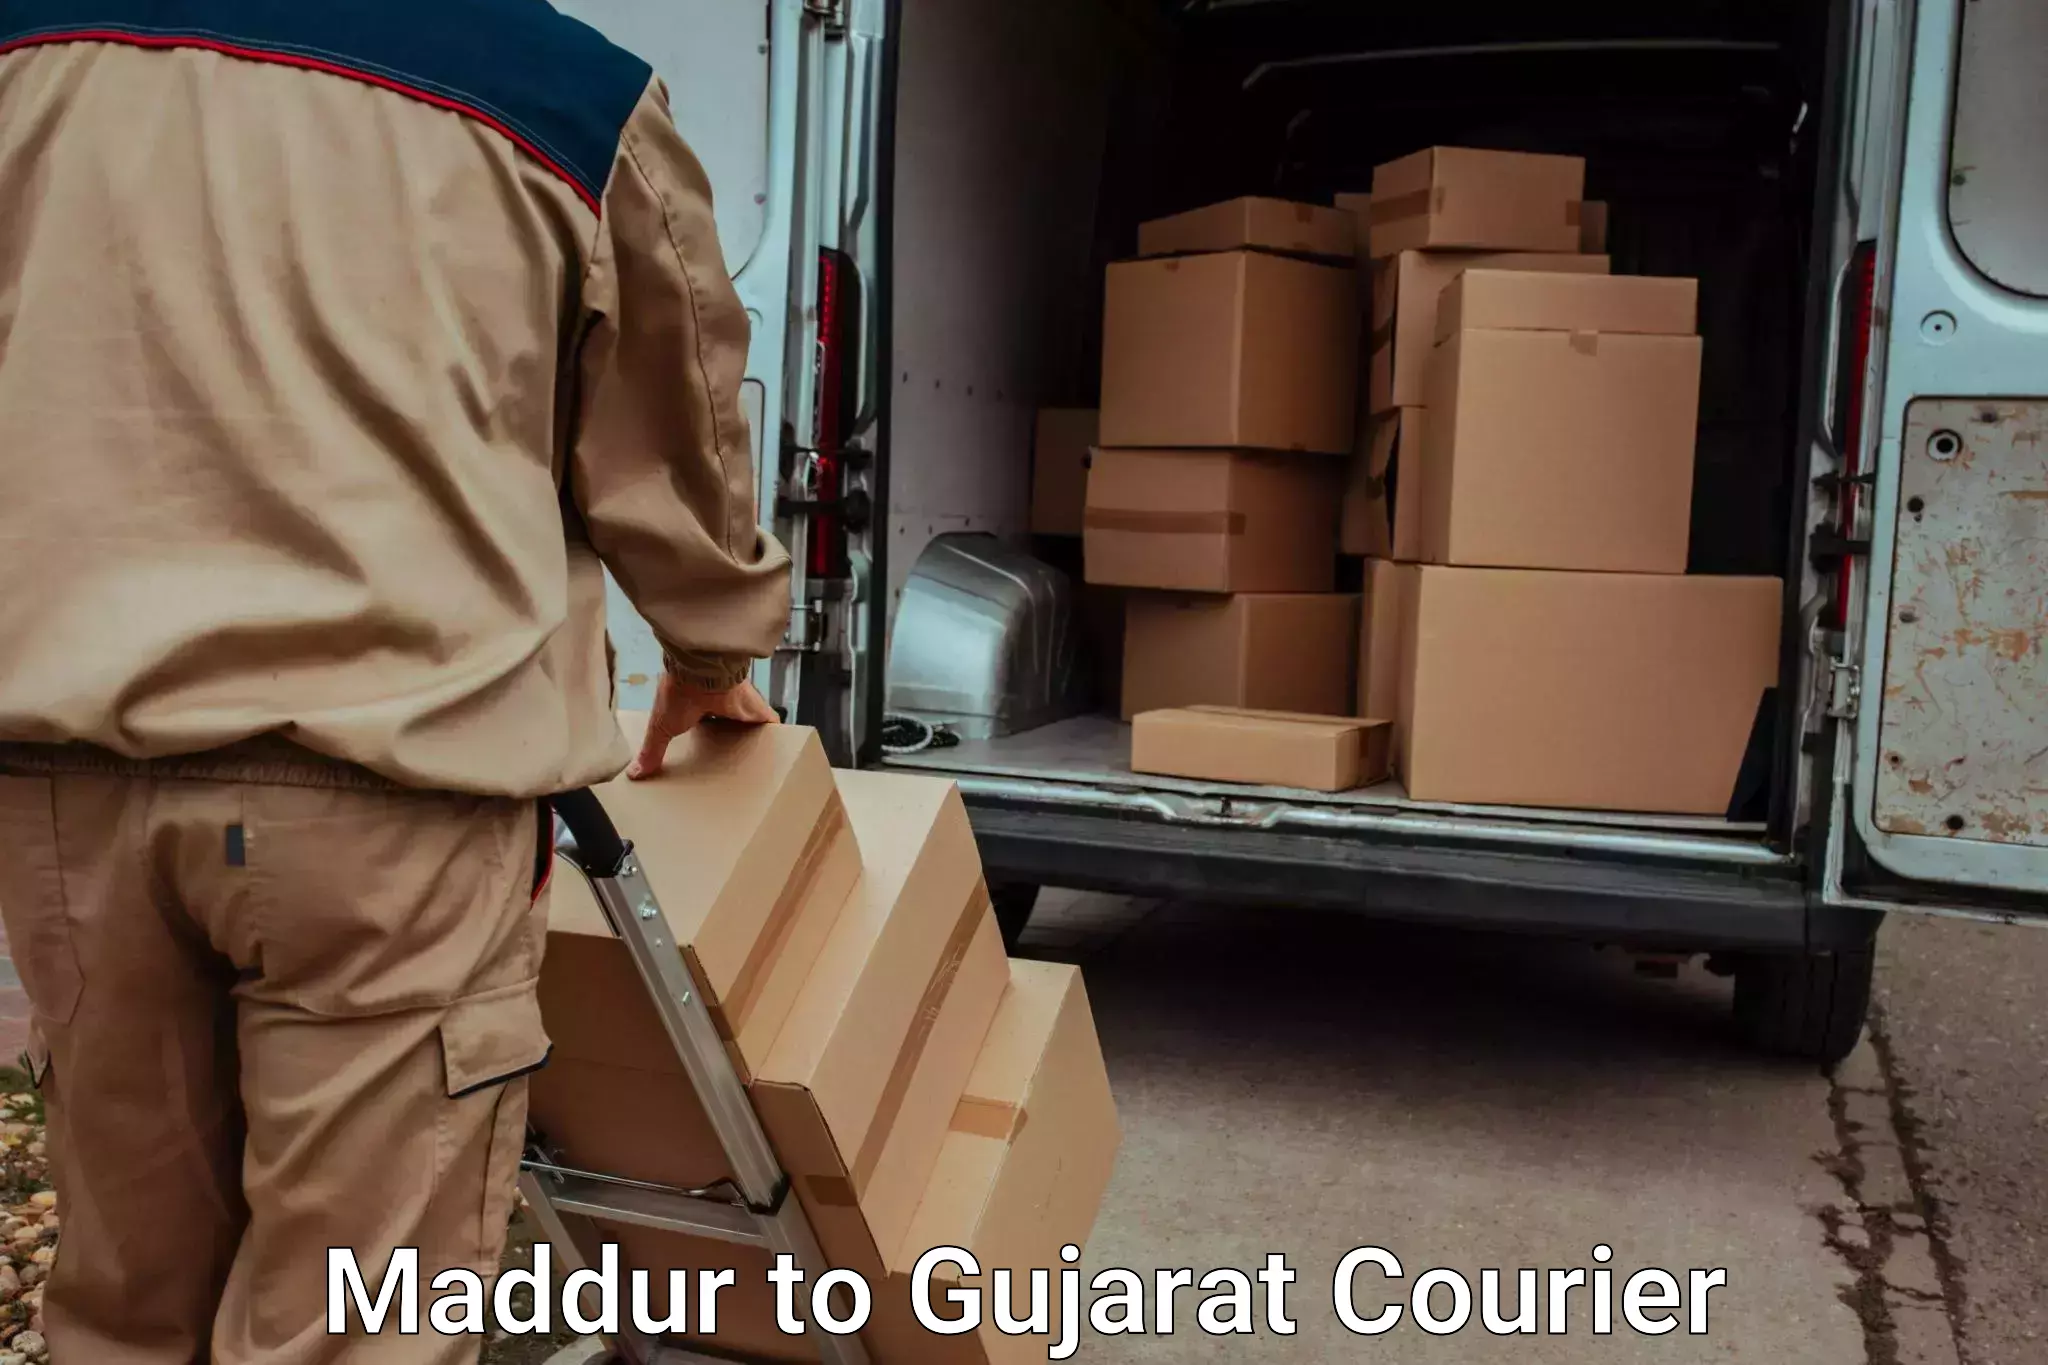 Professional moving company Maddur to Gujarat